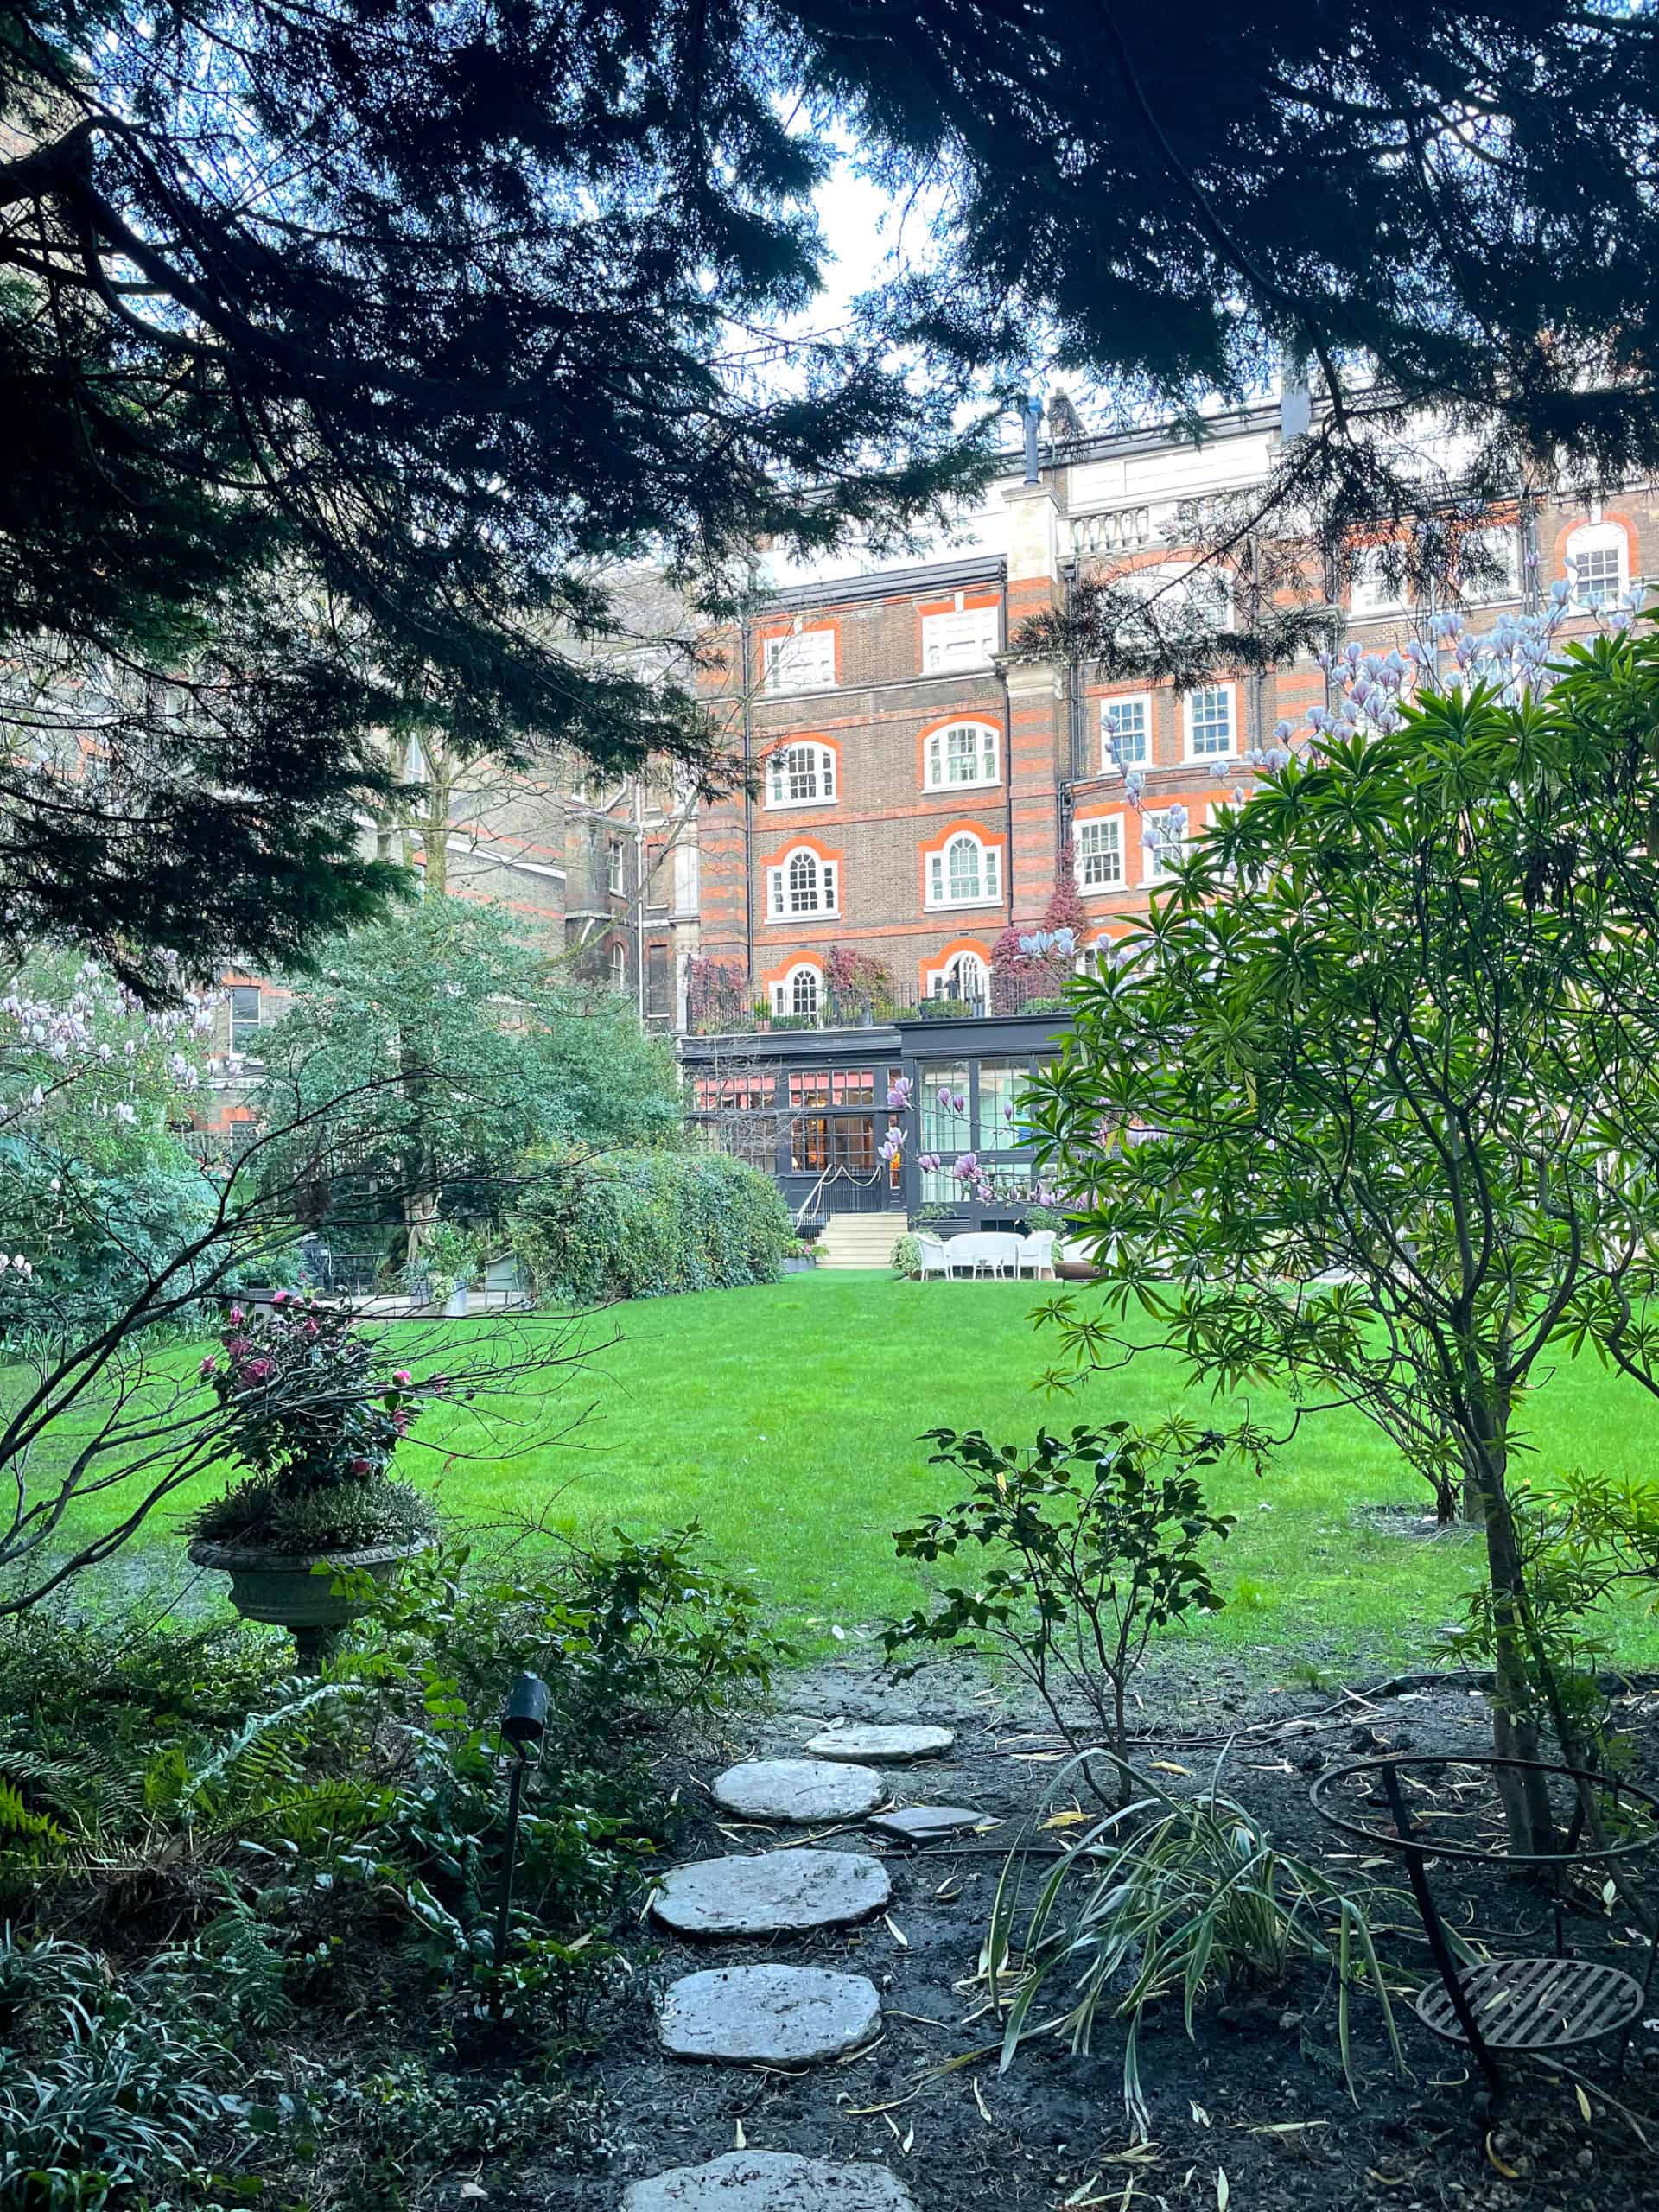 UK - England - London - The Goring Hotel Belgravia walking through the garden via stepping stones